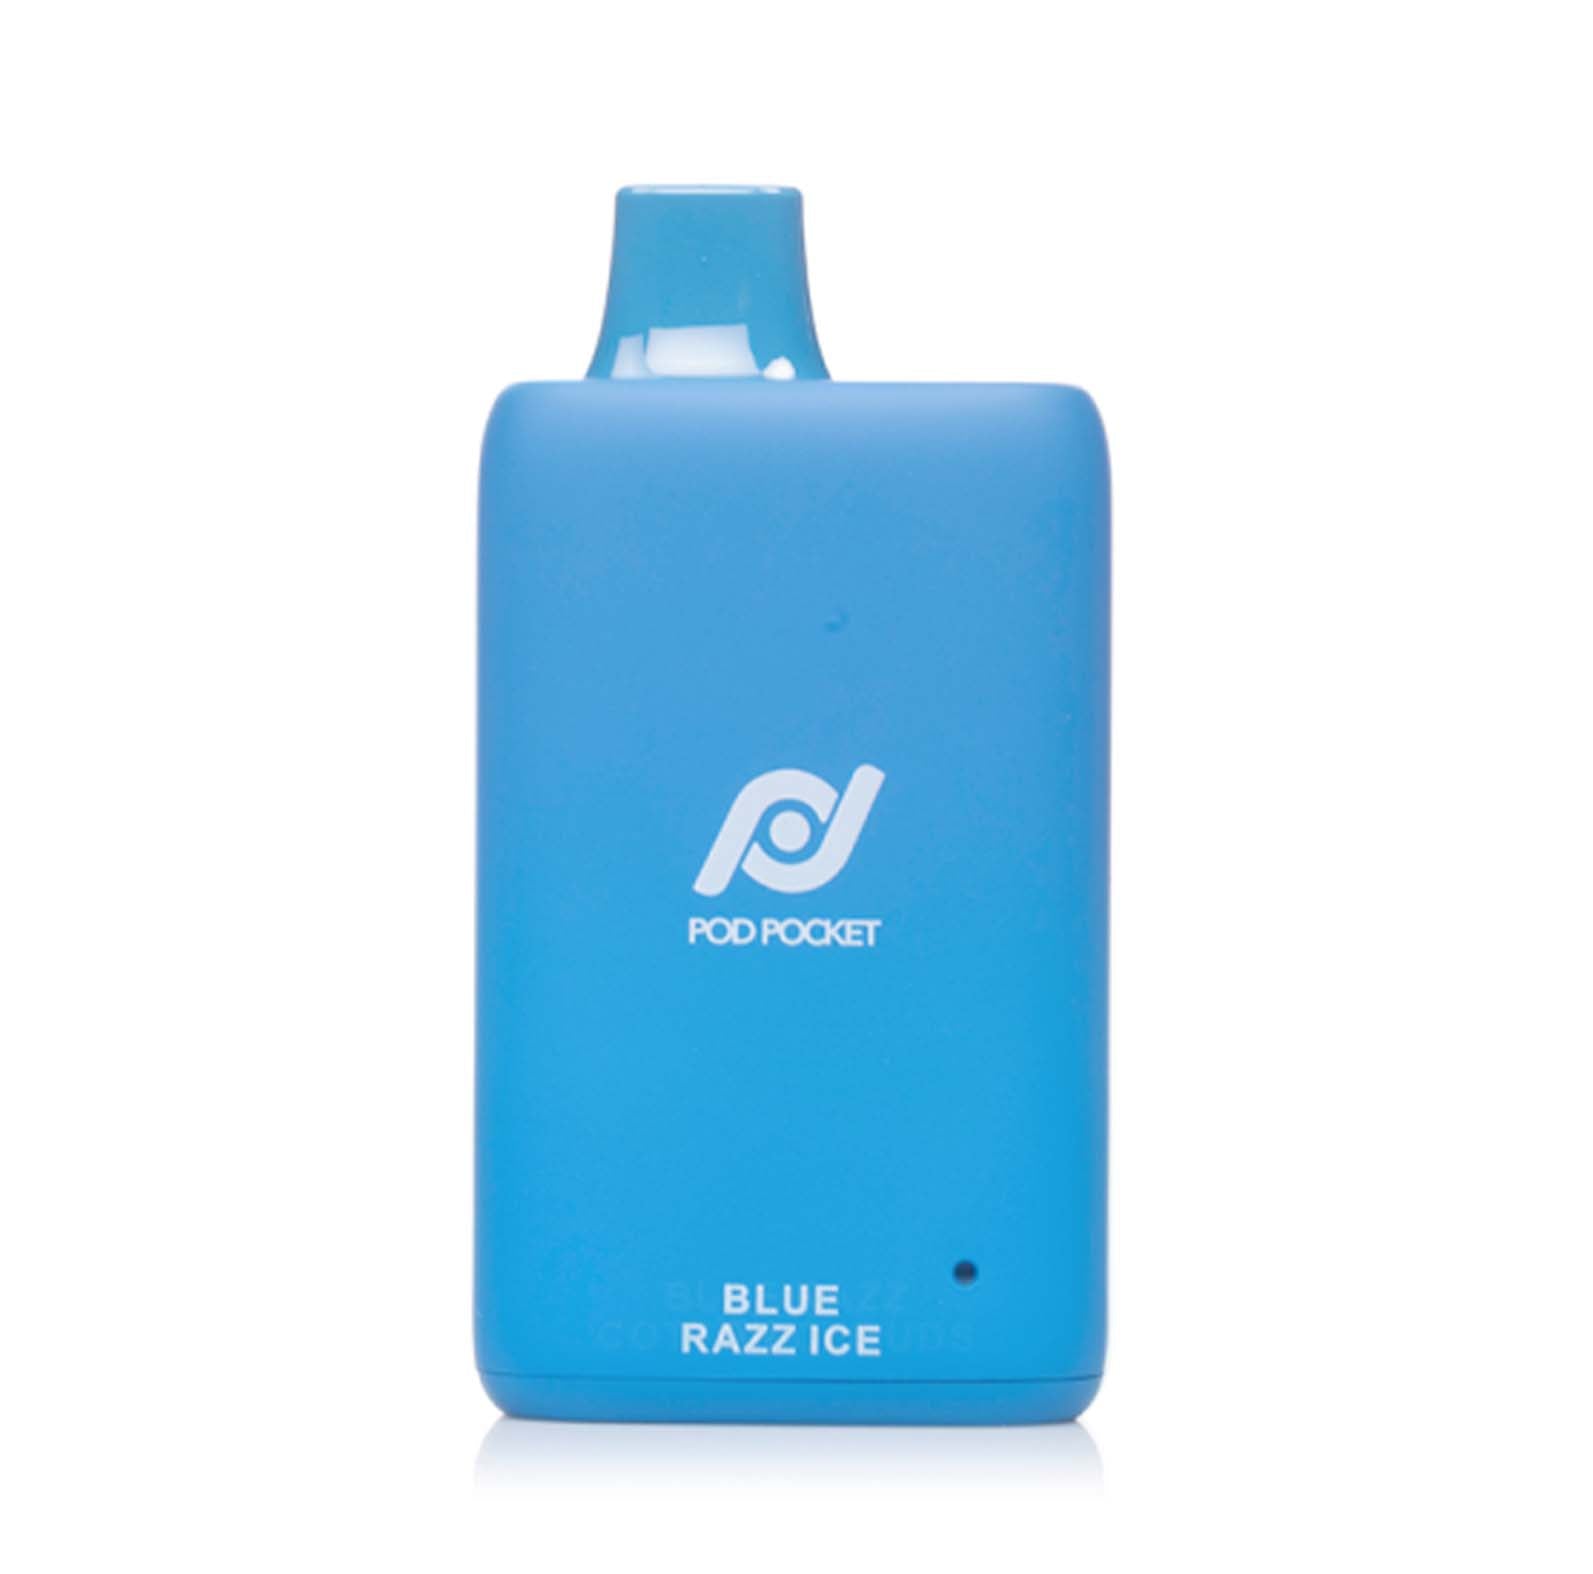 Pod Pocket 7500 Puff Disposable Vape | Blue Razz Ice